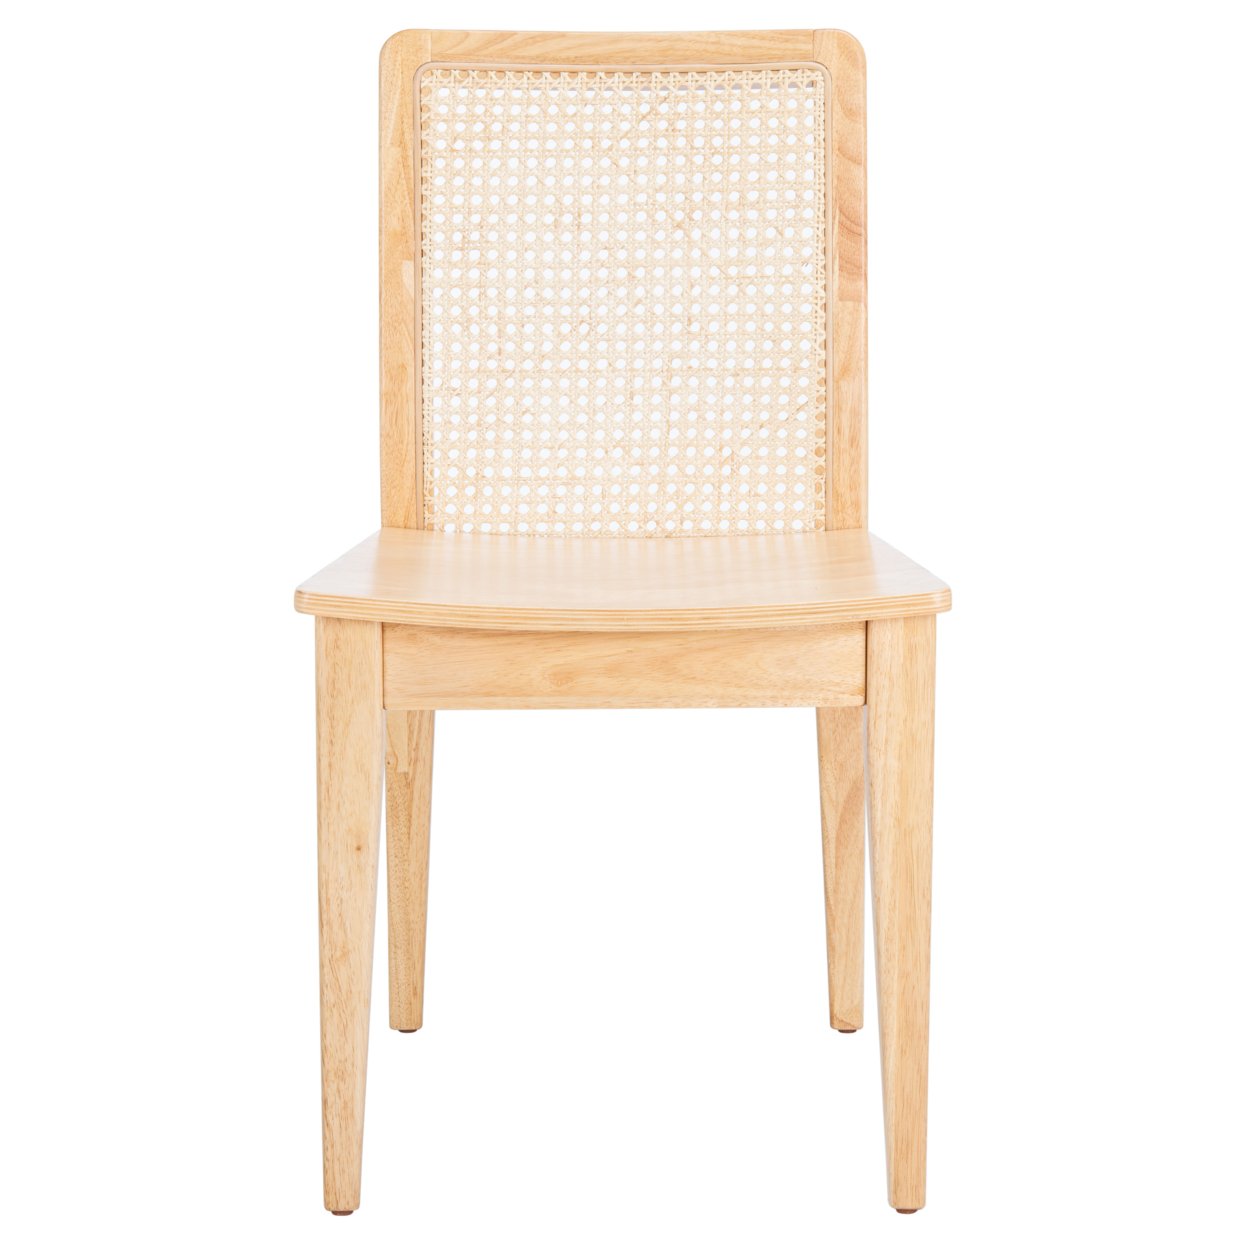 SAFAVIEH Benicio Rattan Dining Chair Set Of 2 Natural